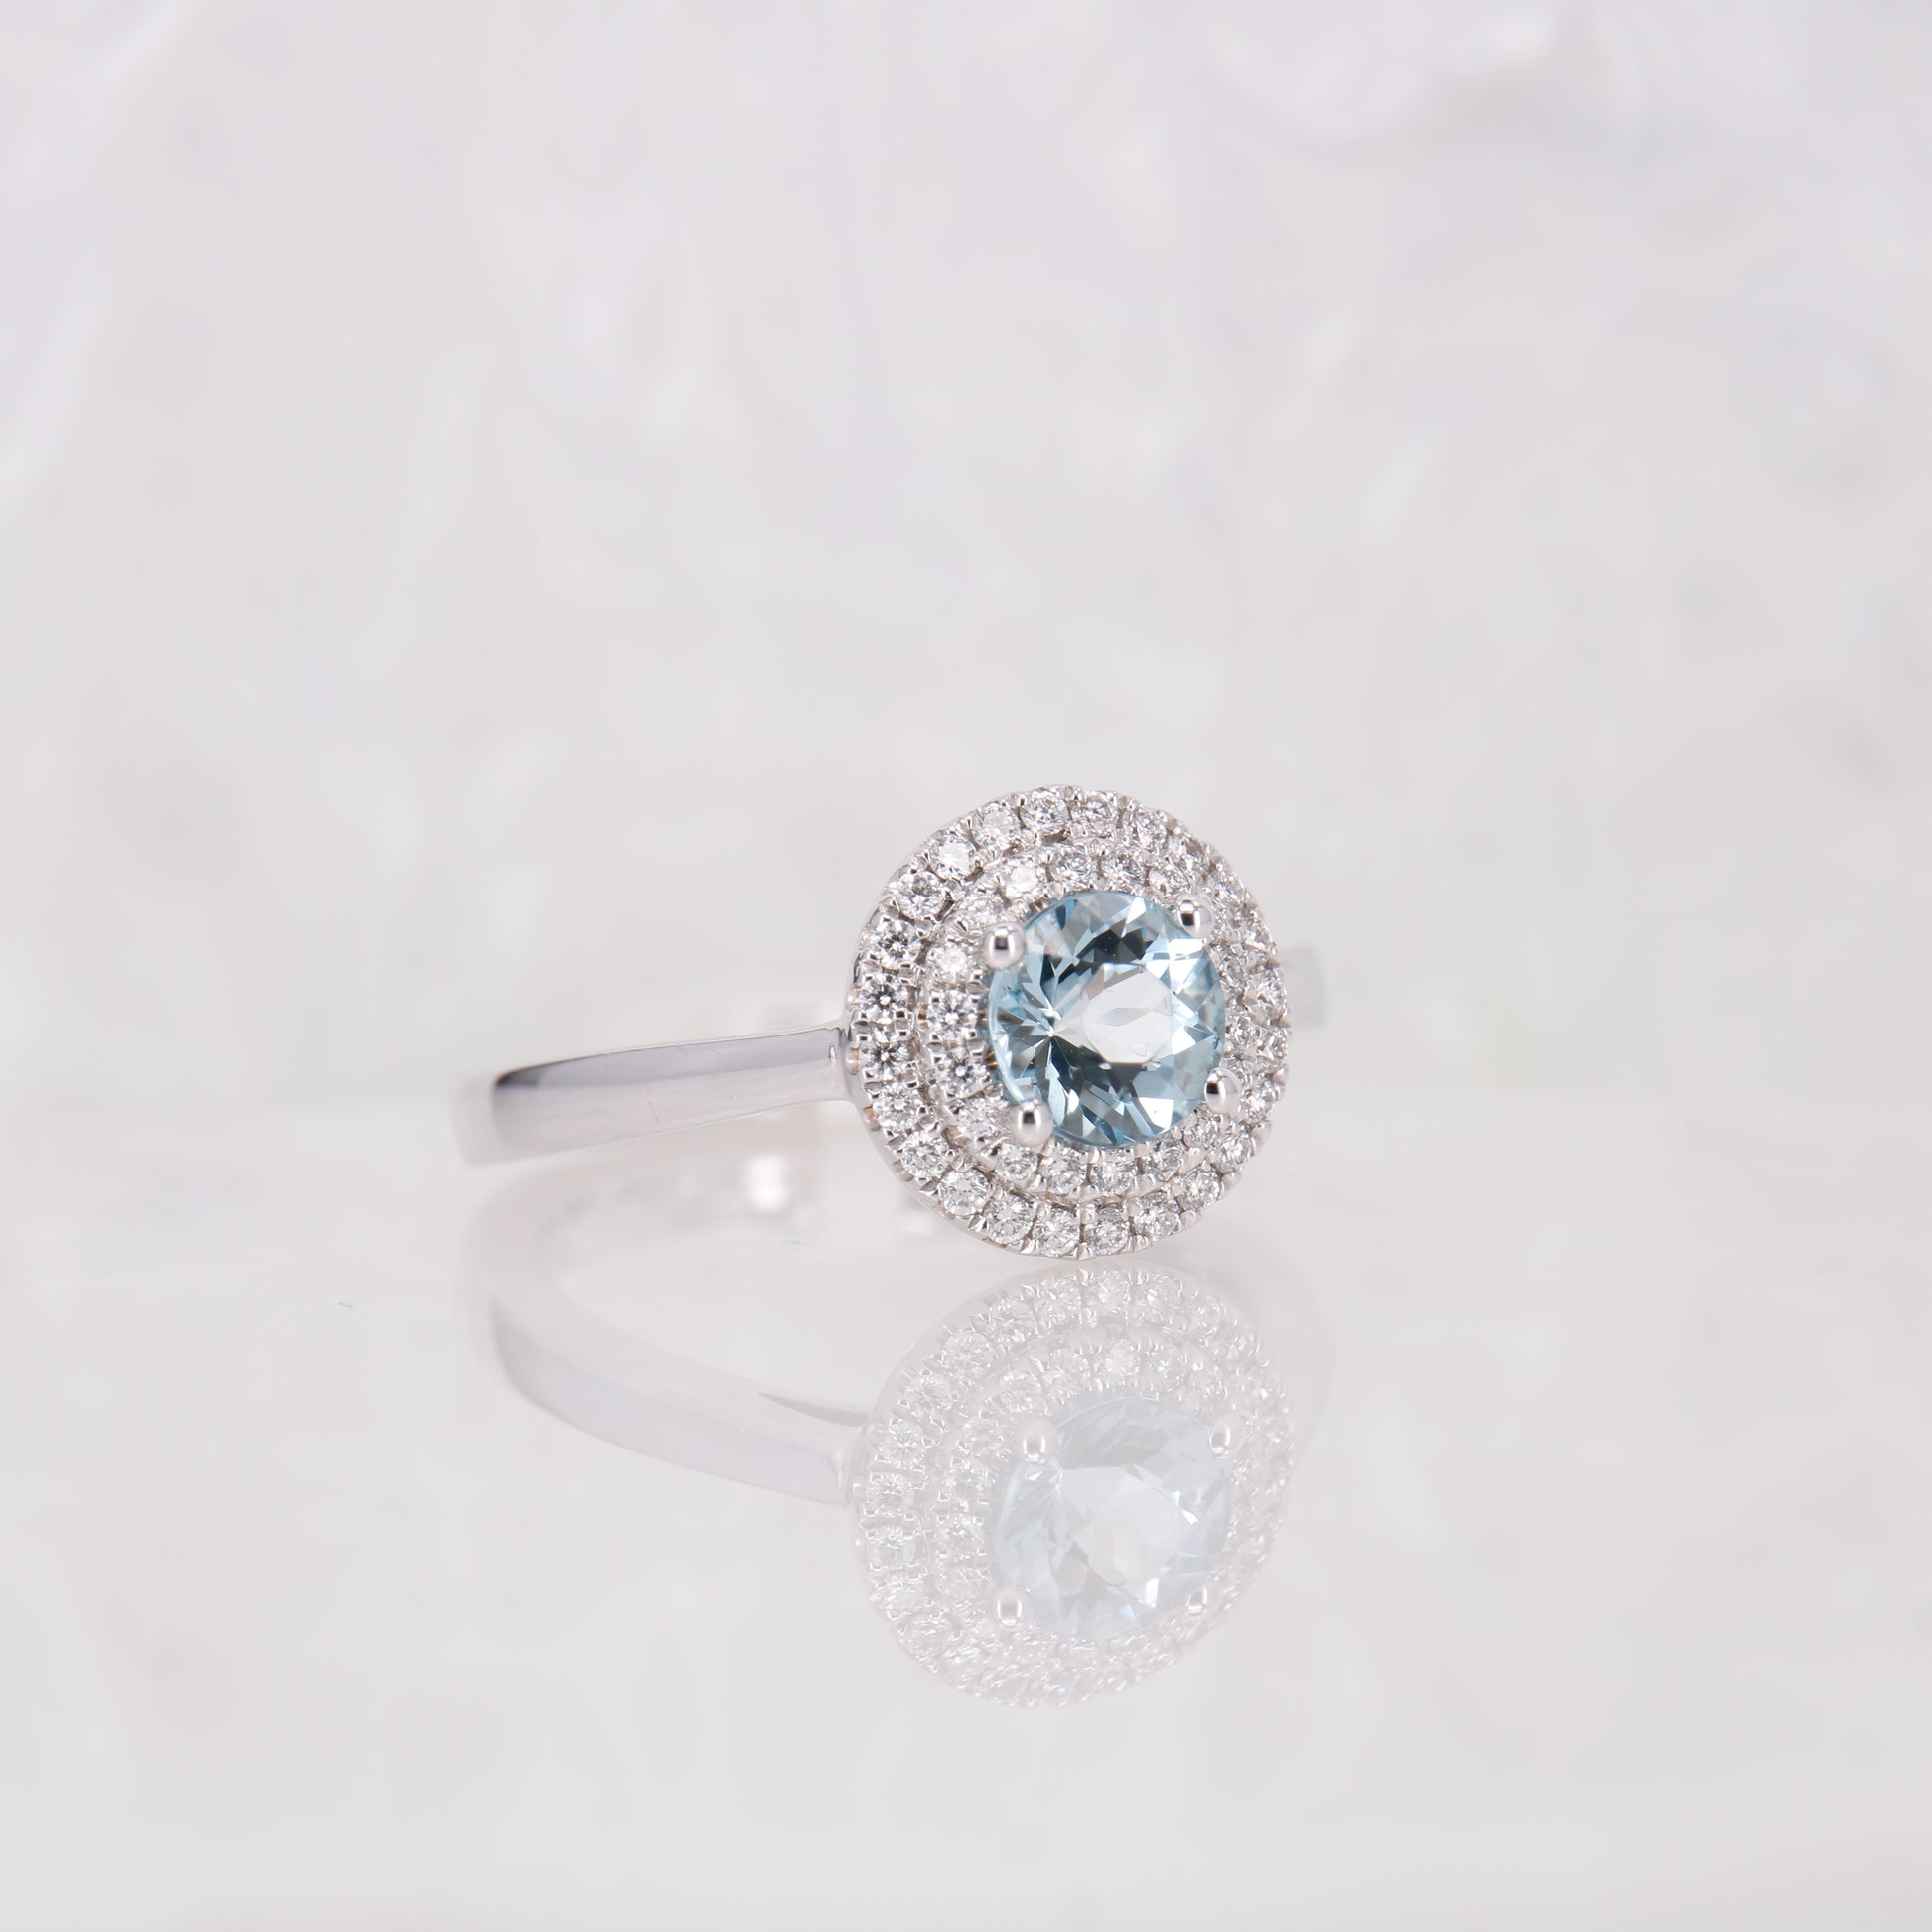 18ct White Gold Aquamarine and Diamond Ring. 0.78ct aquamarine and a double halo of diamonds. 